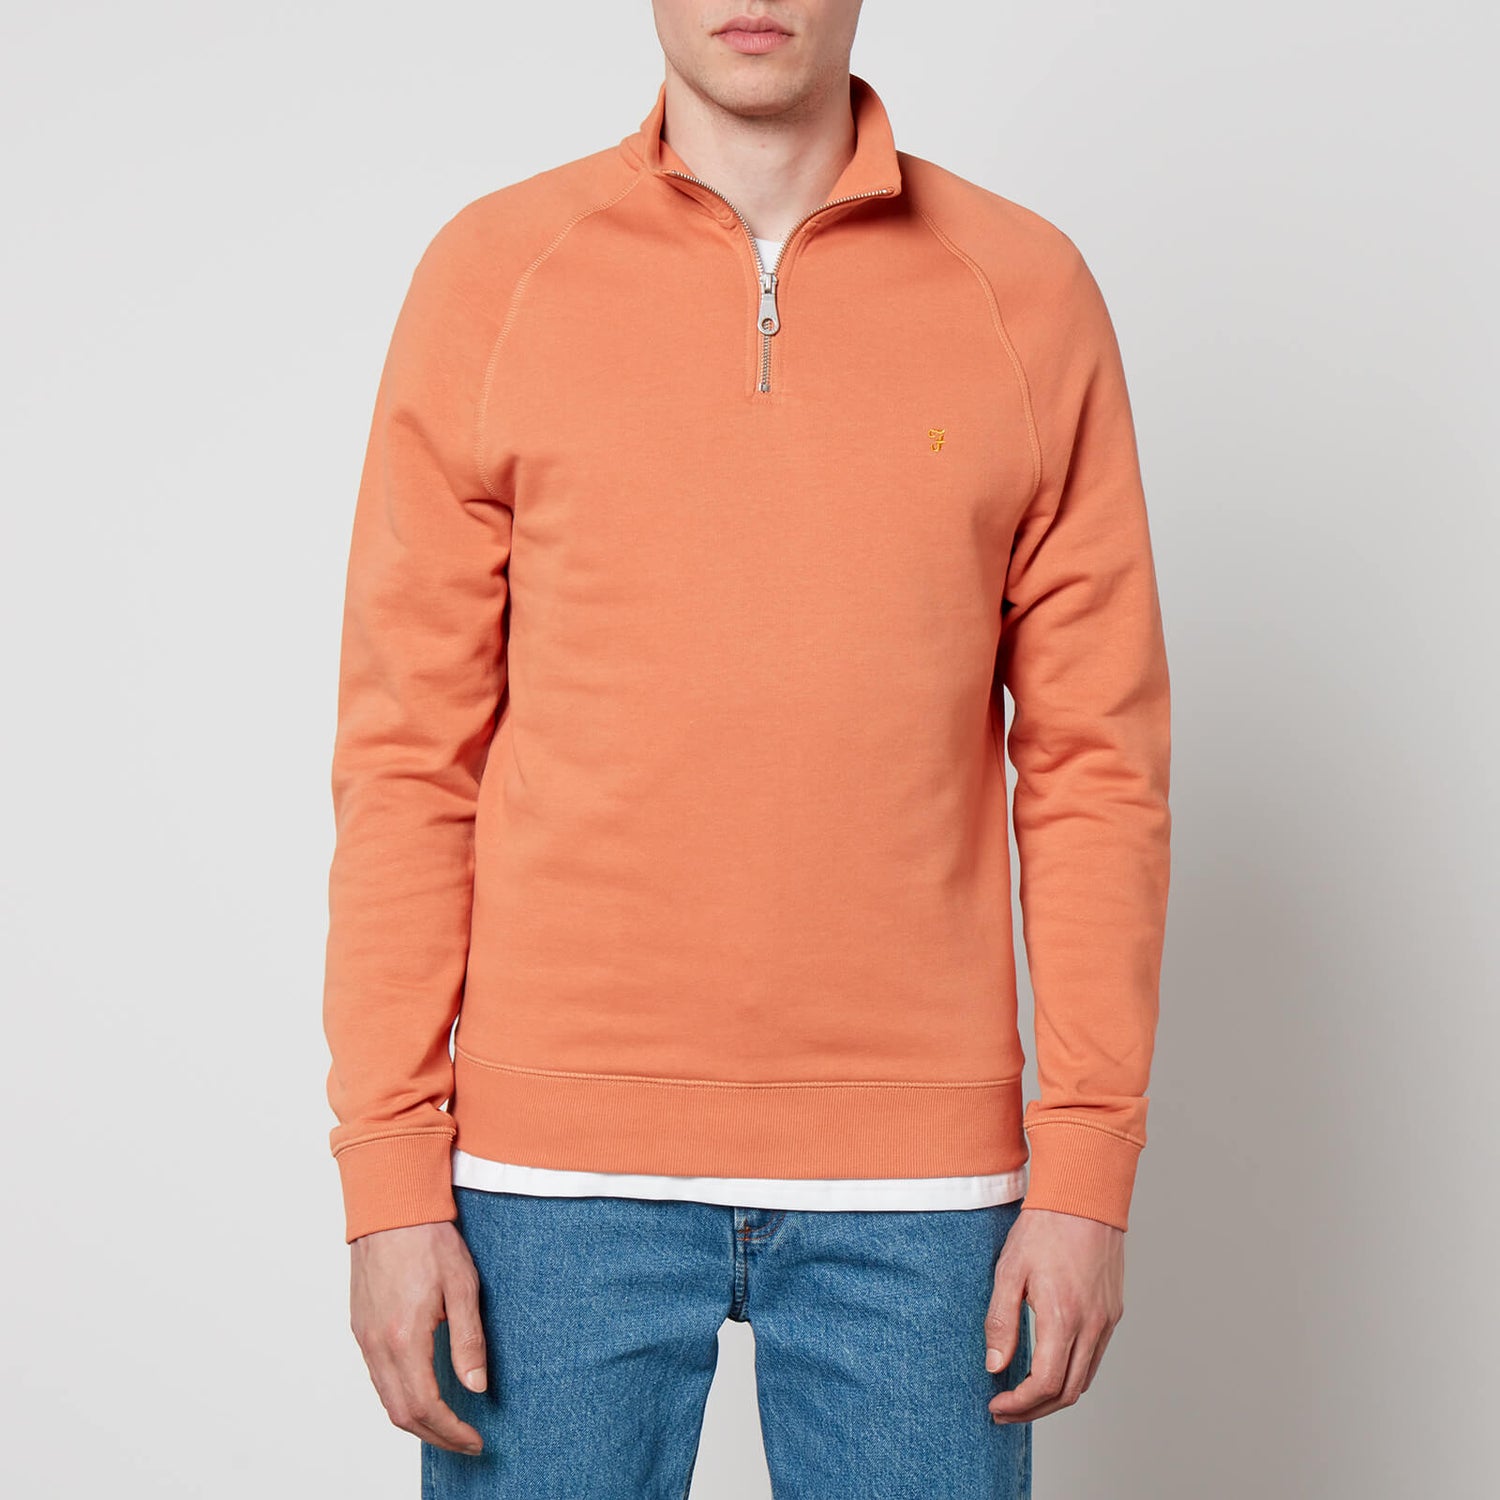 Farah Organic Cotton Jersey Sweatshirt - S